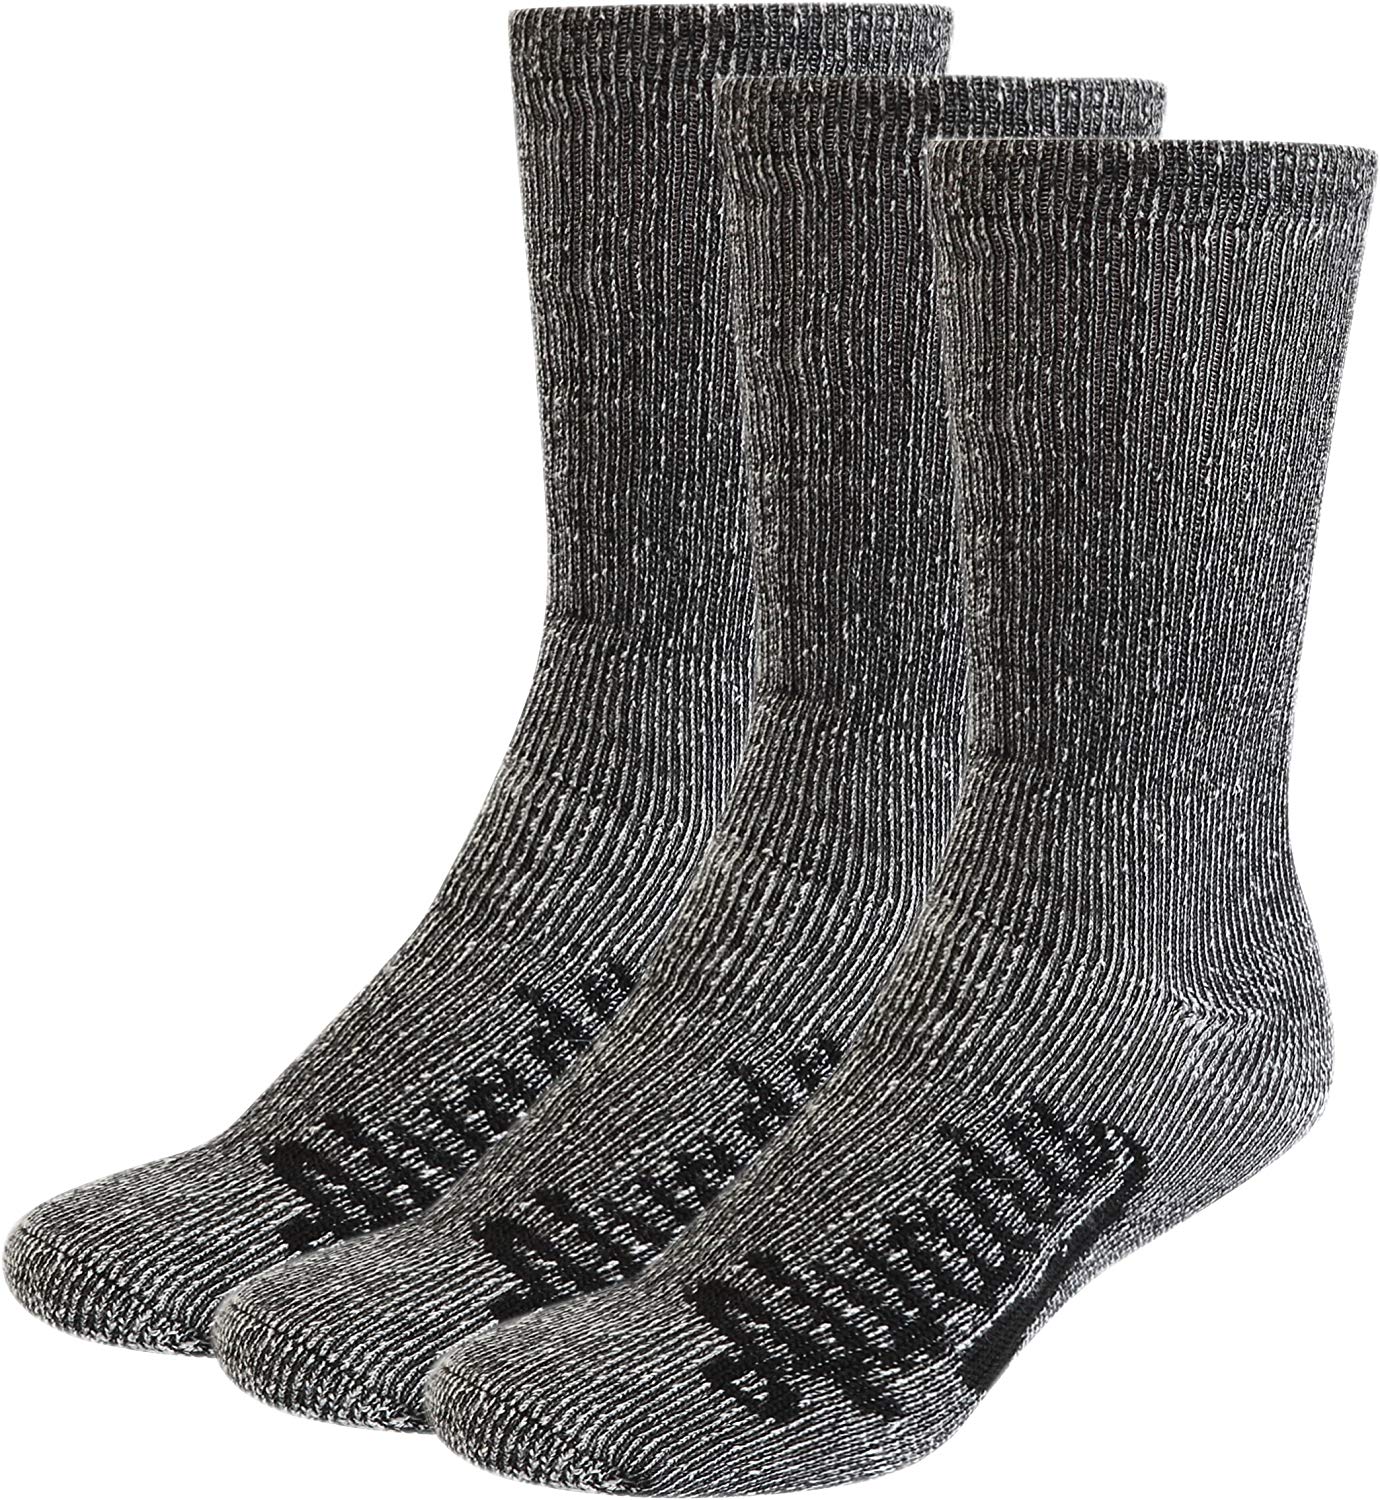 Alvada-80-Merino-Wool-Hiking-Socks